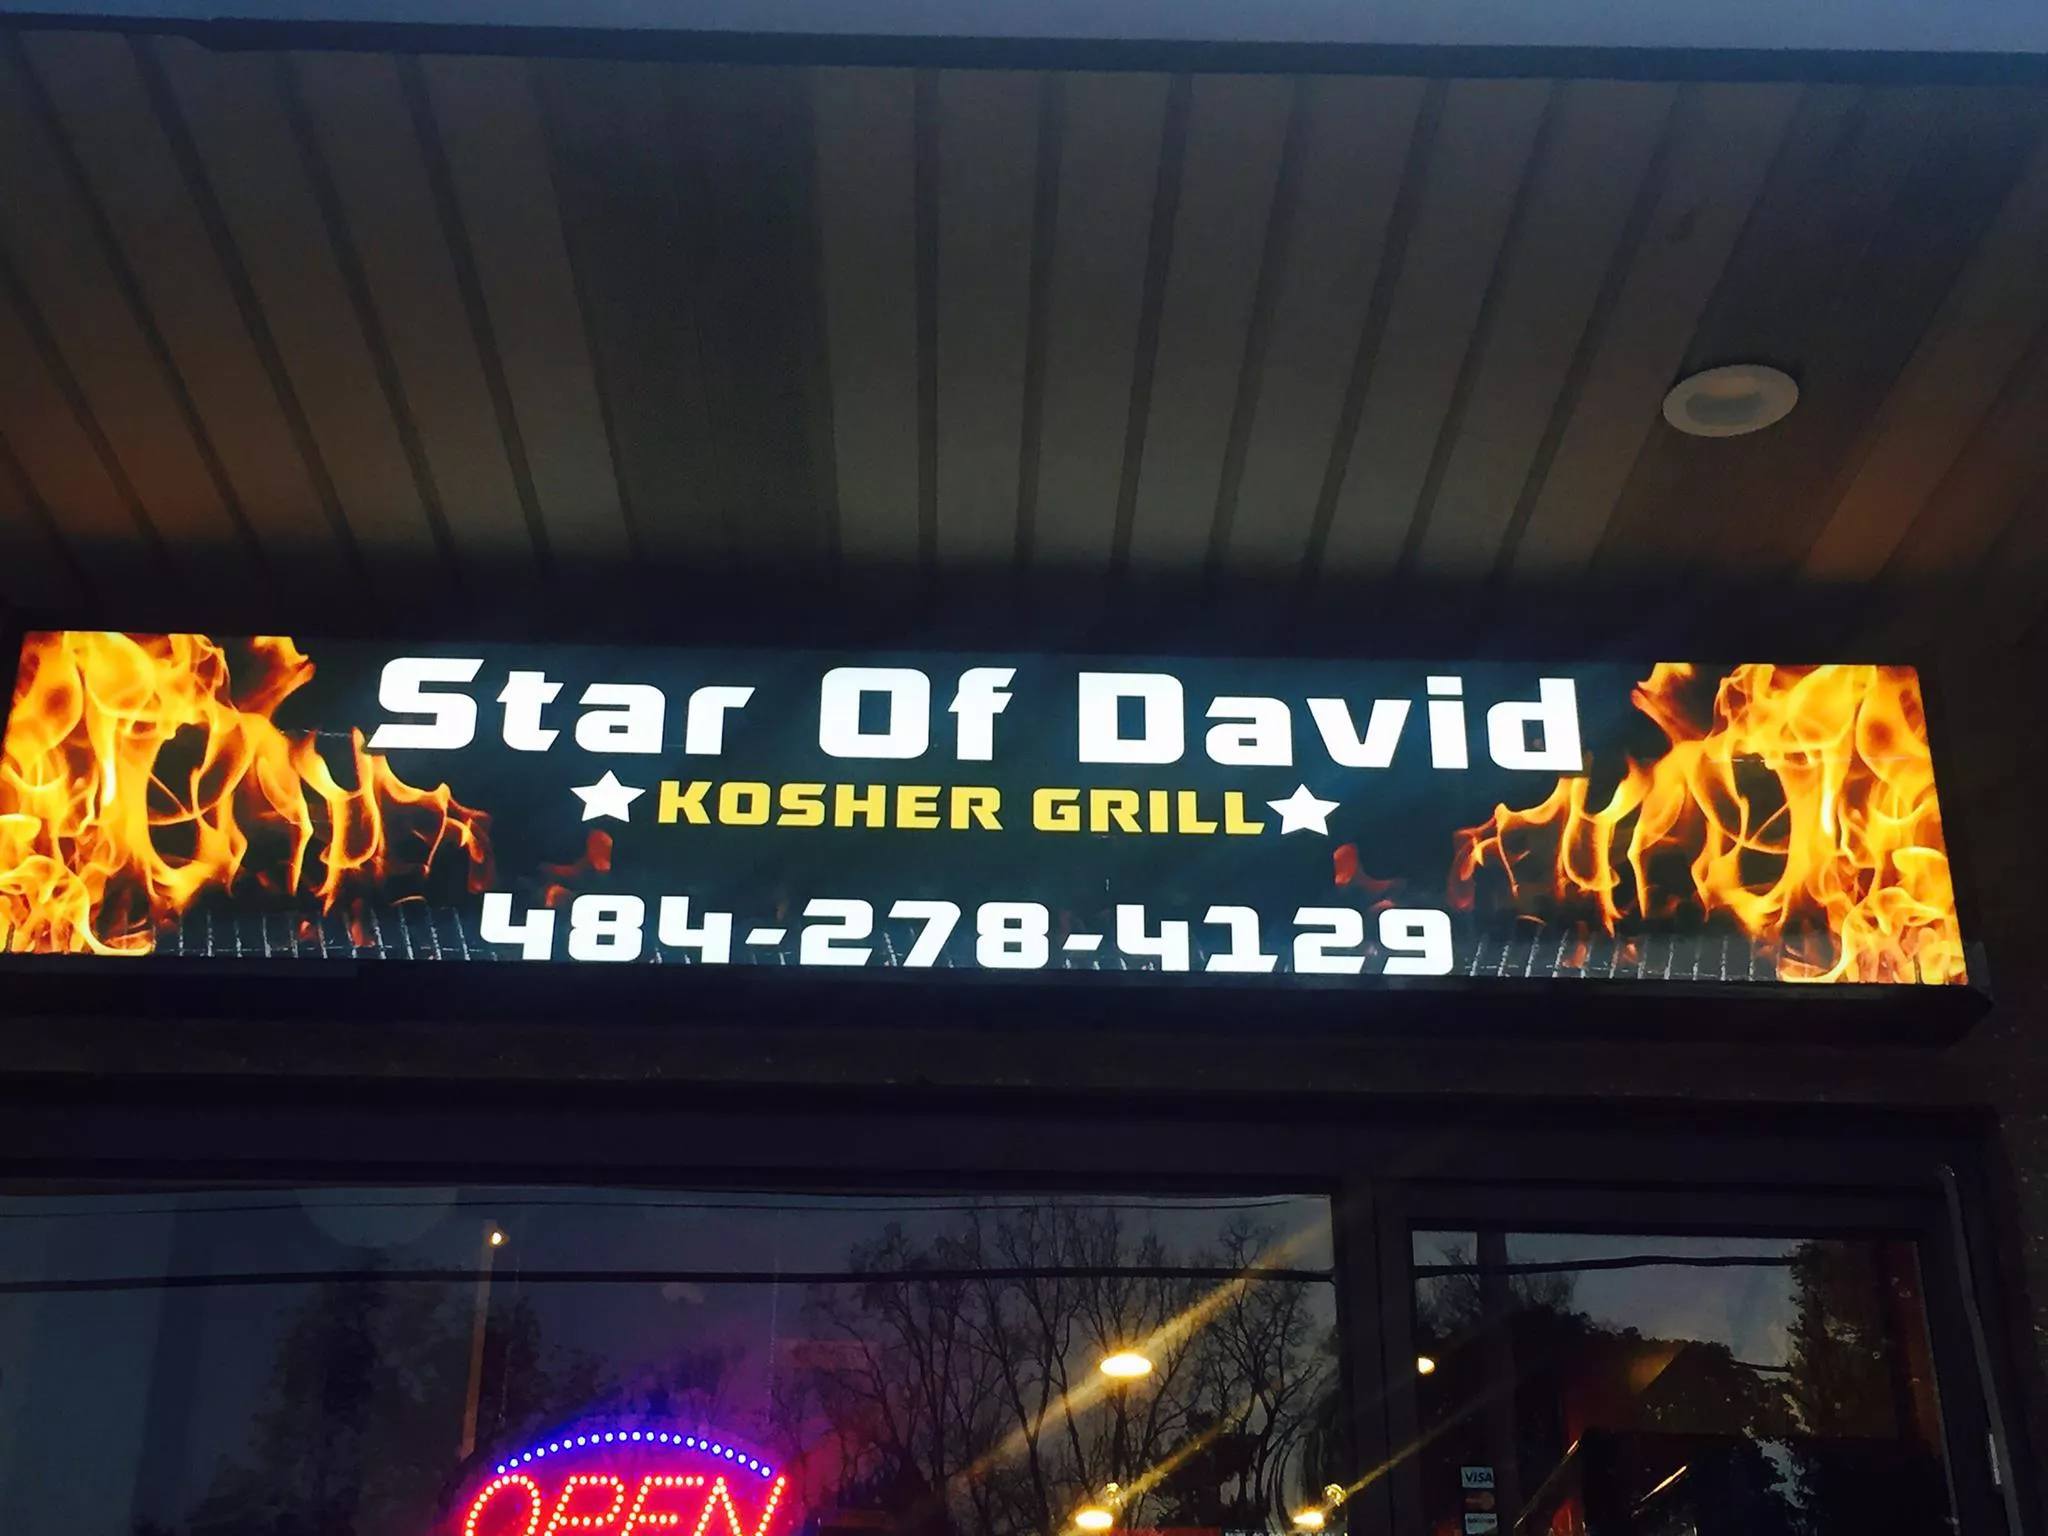 Star of David Kosher Grill